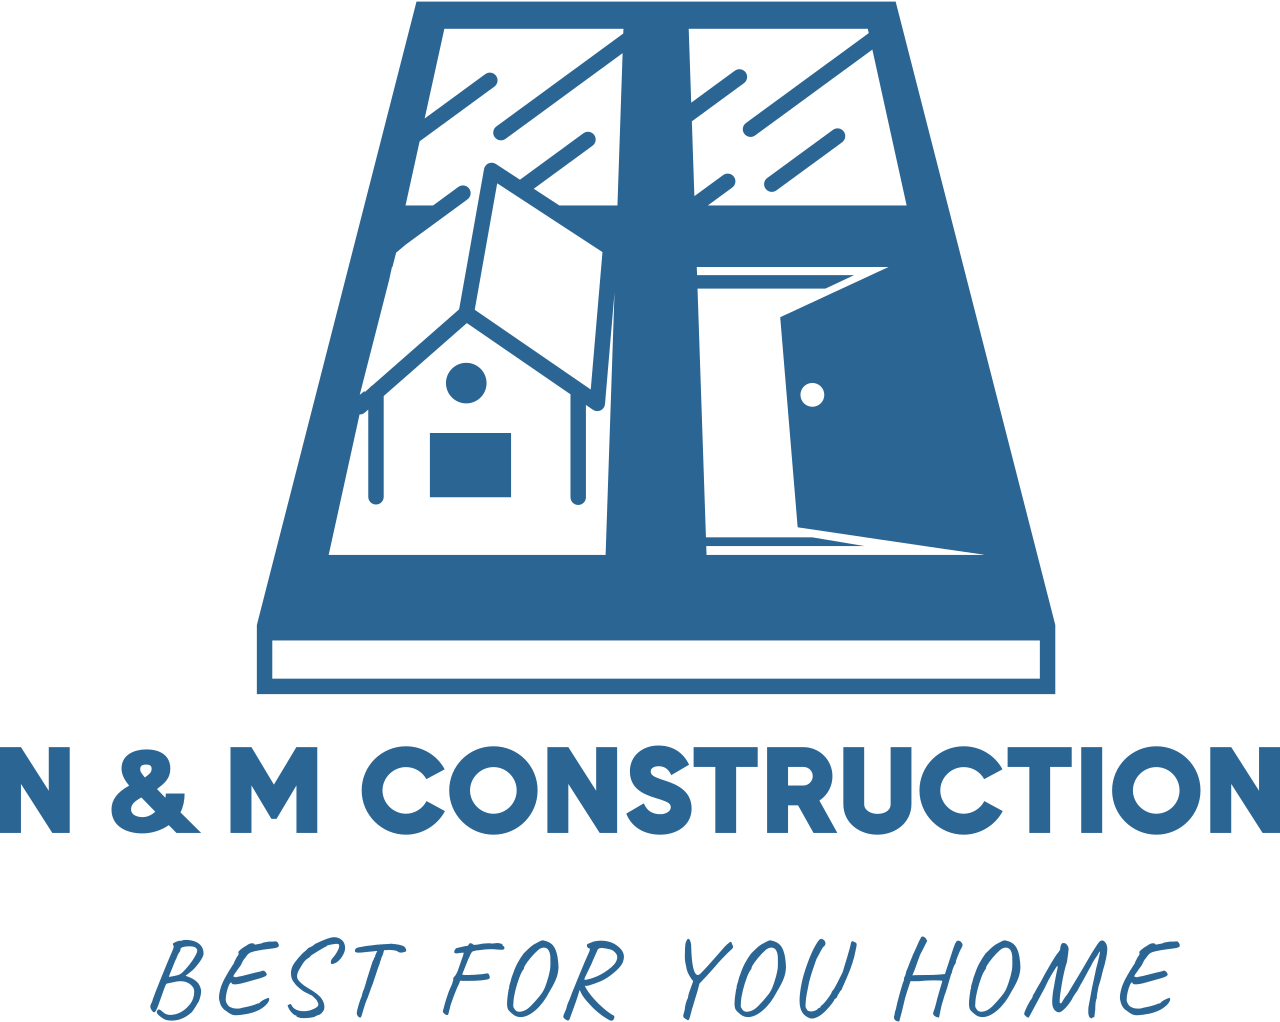 N & M CONSTRUCTION 's logo